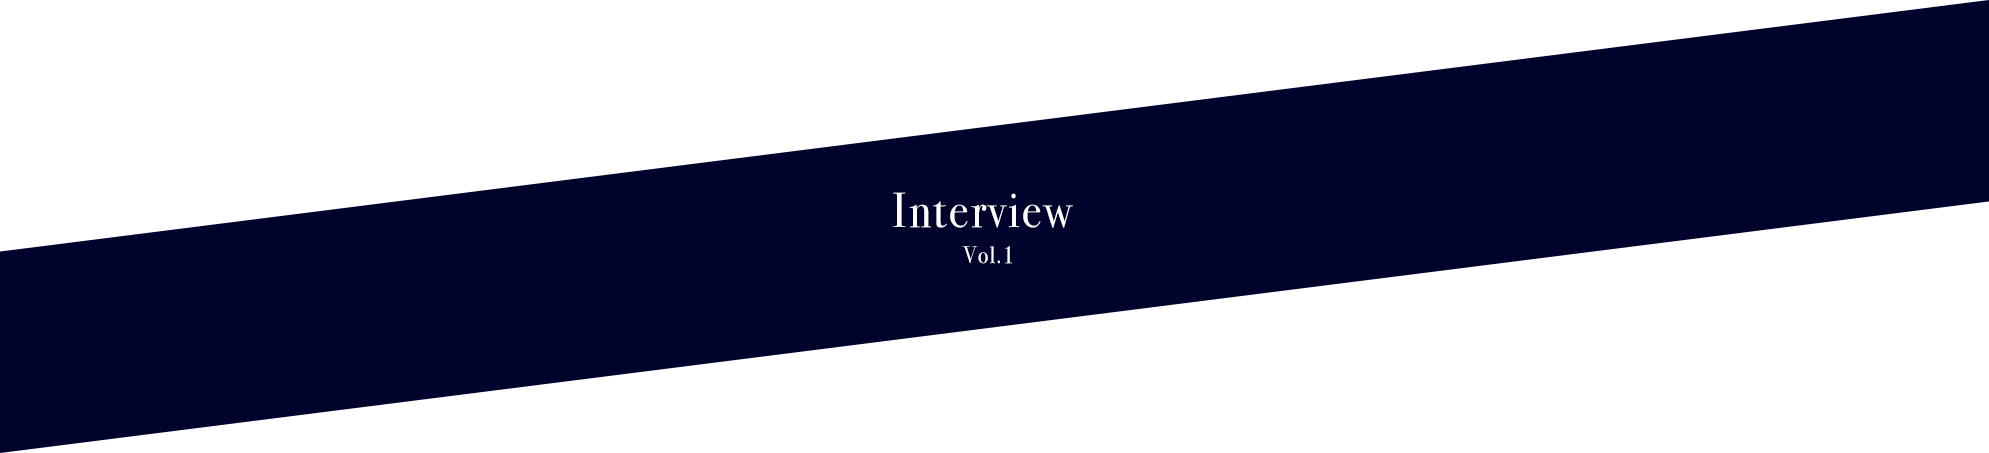 Interview Vol.1